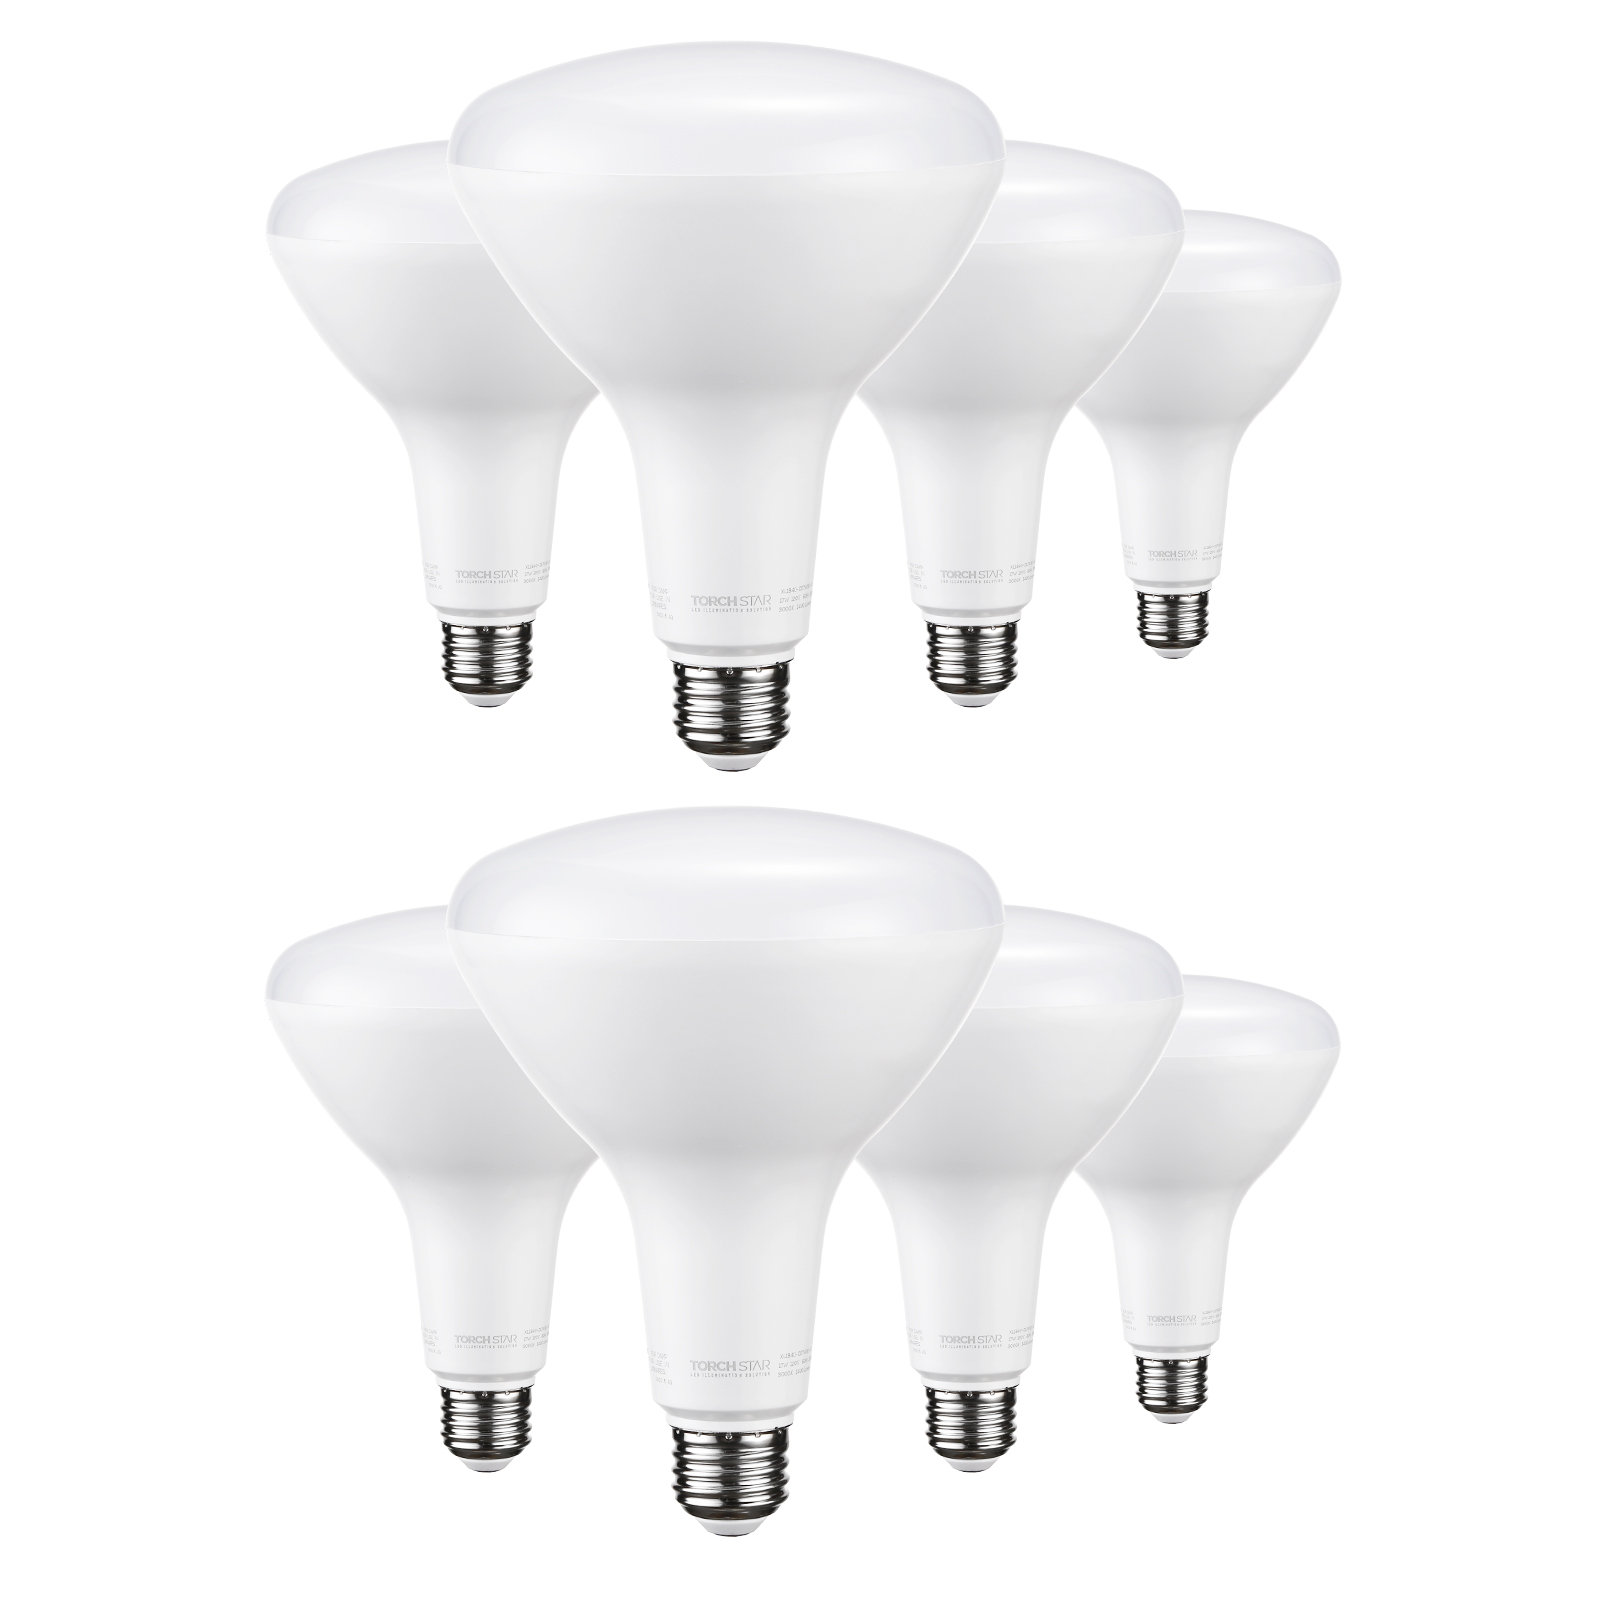 TORCHSTAR BR40 LED Light Bulbs, 17W, 1400lm, Dimmable, E26 Base